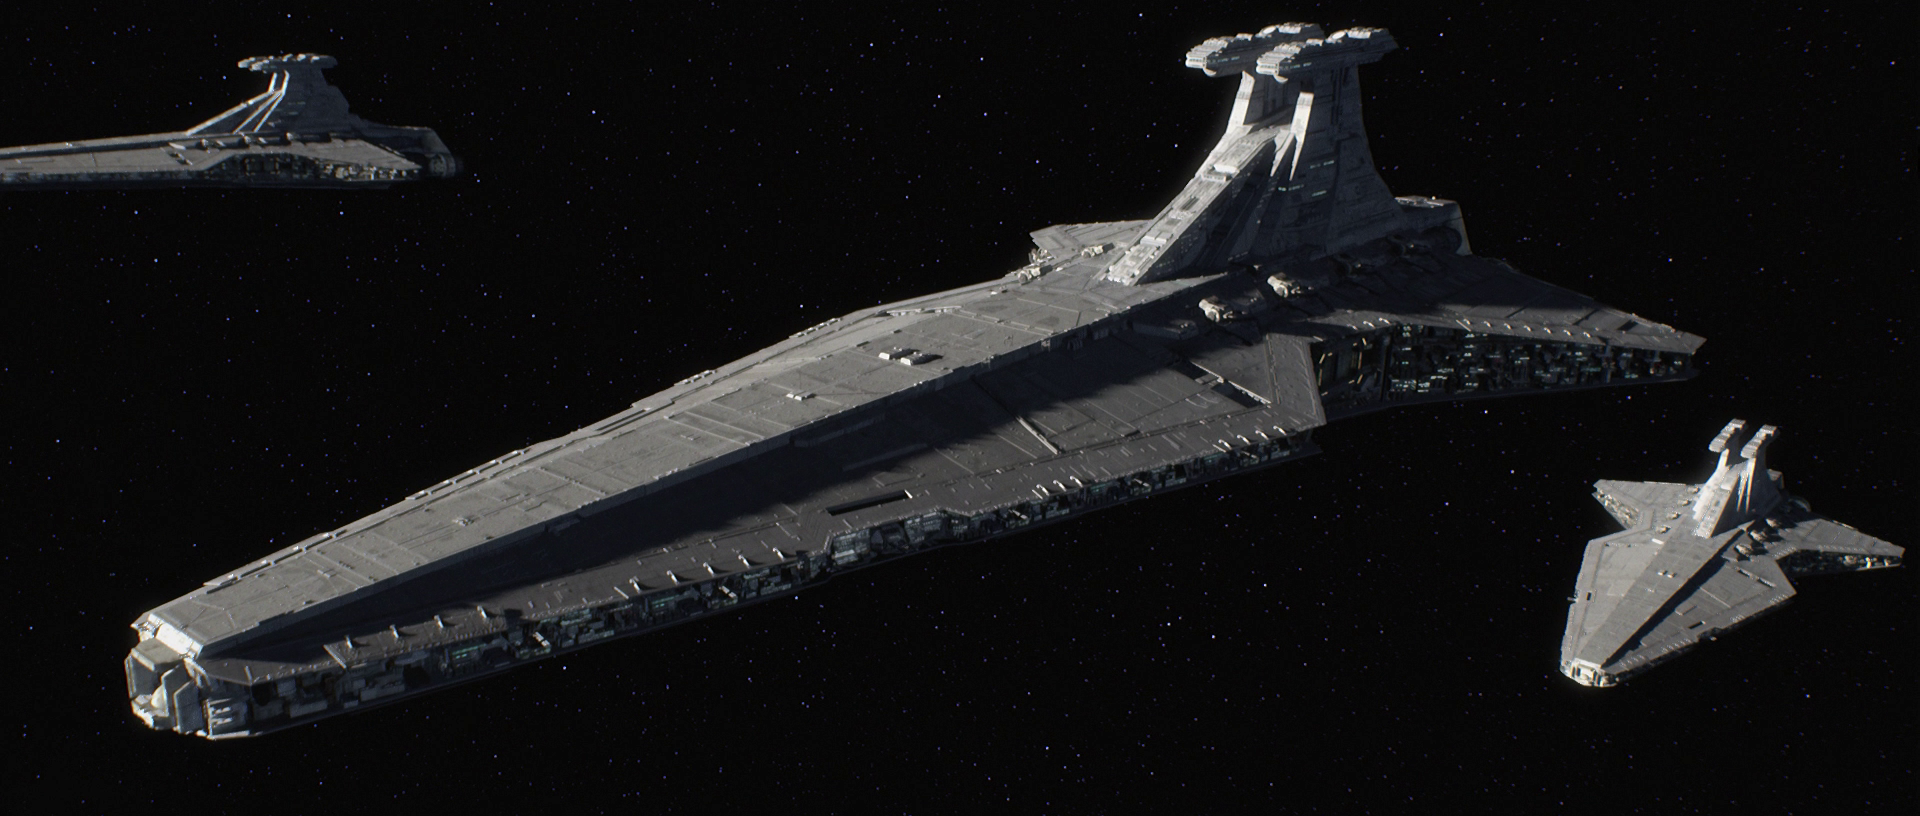 Imperial Navy. Star destroyer, Star wars vehicles, Star wars ships